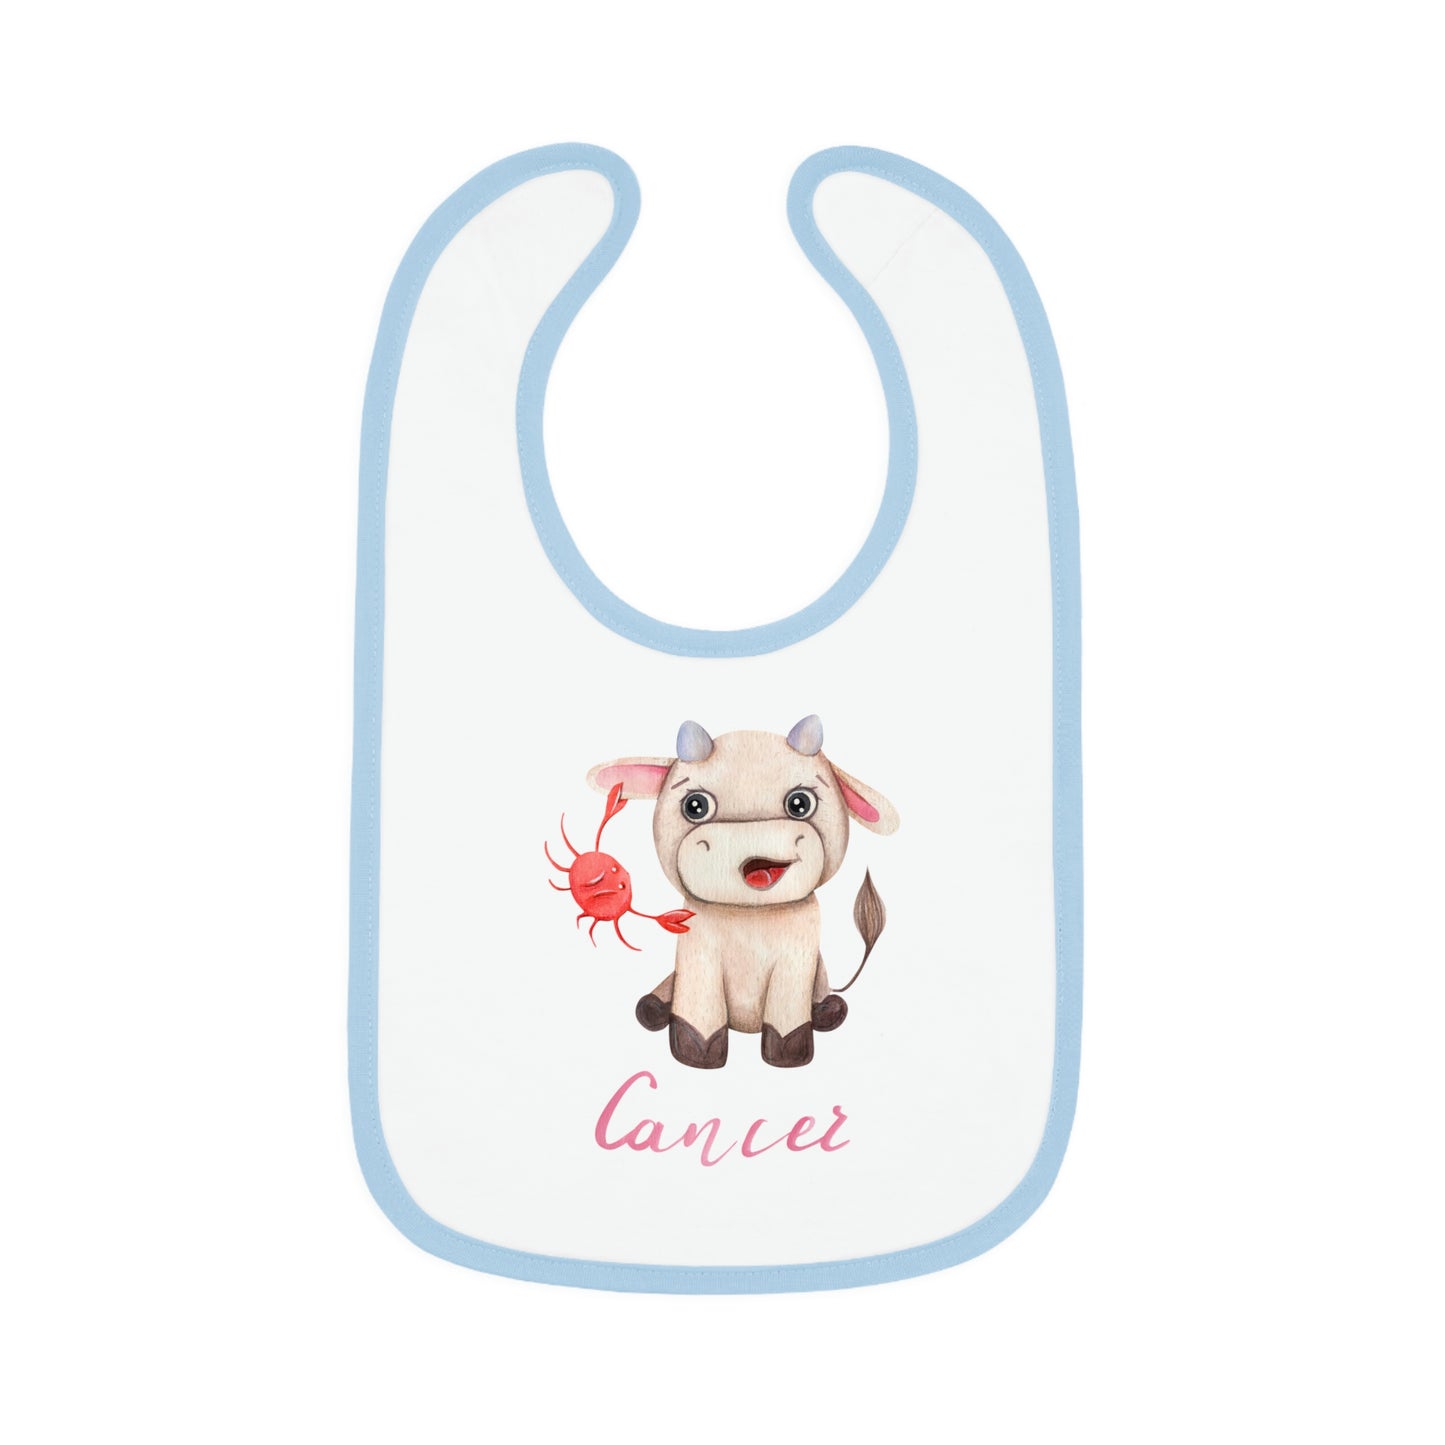 Baby Cancer Bib: Bull-Aries Watercolor